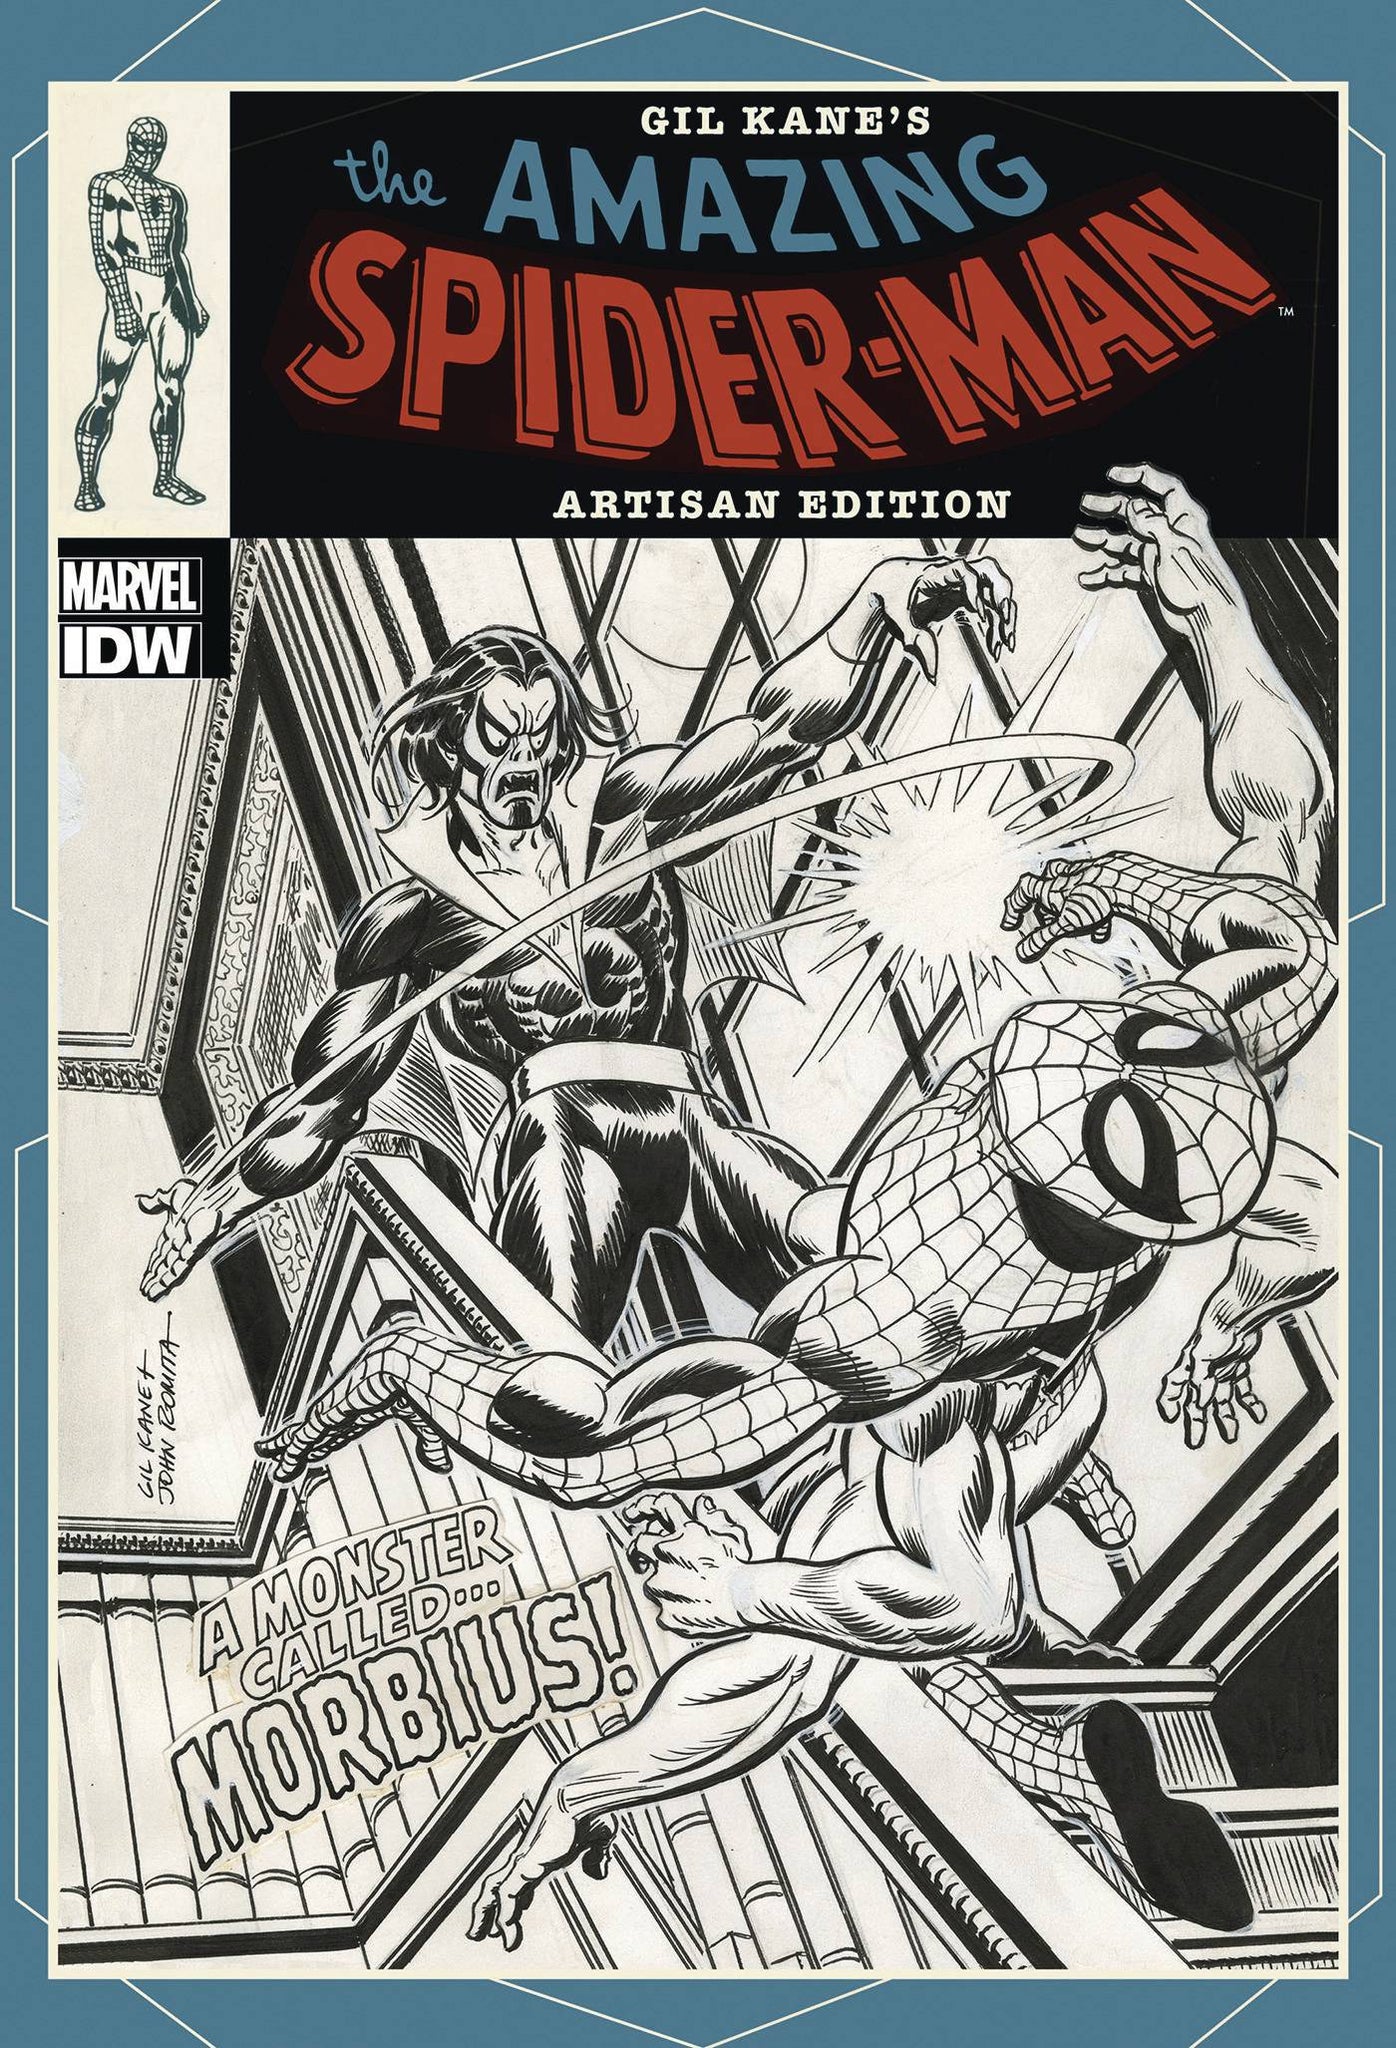 Gil Kane's Amazing Spider-Man Artisan Edition